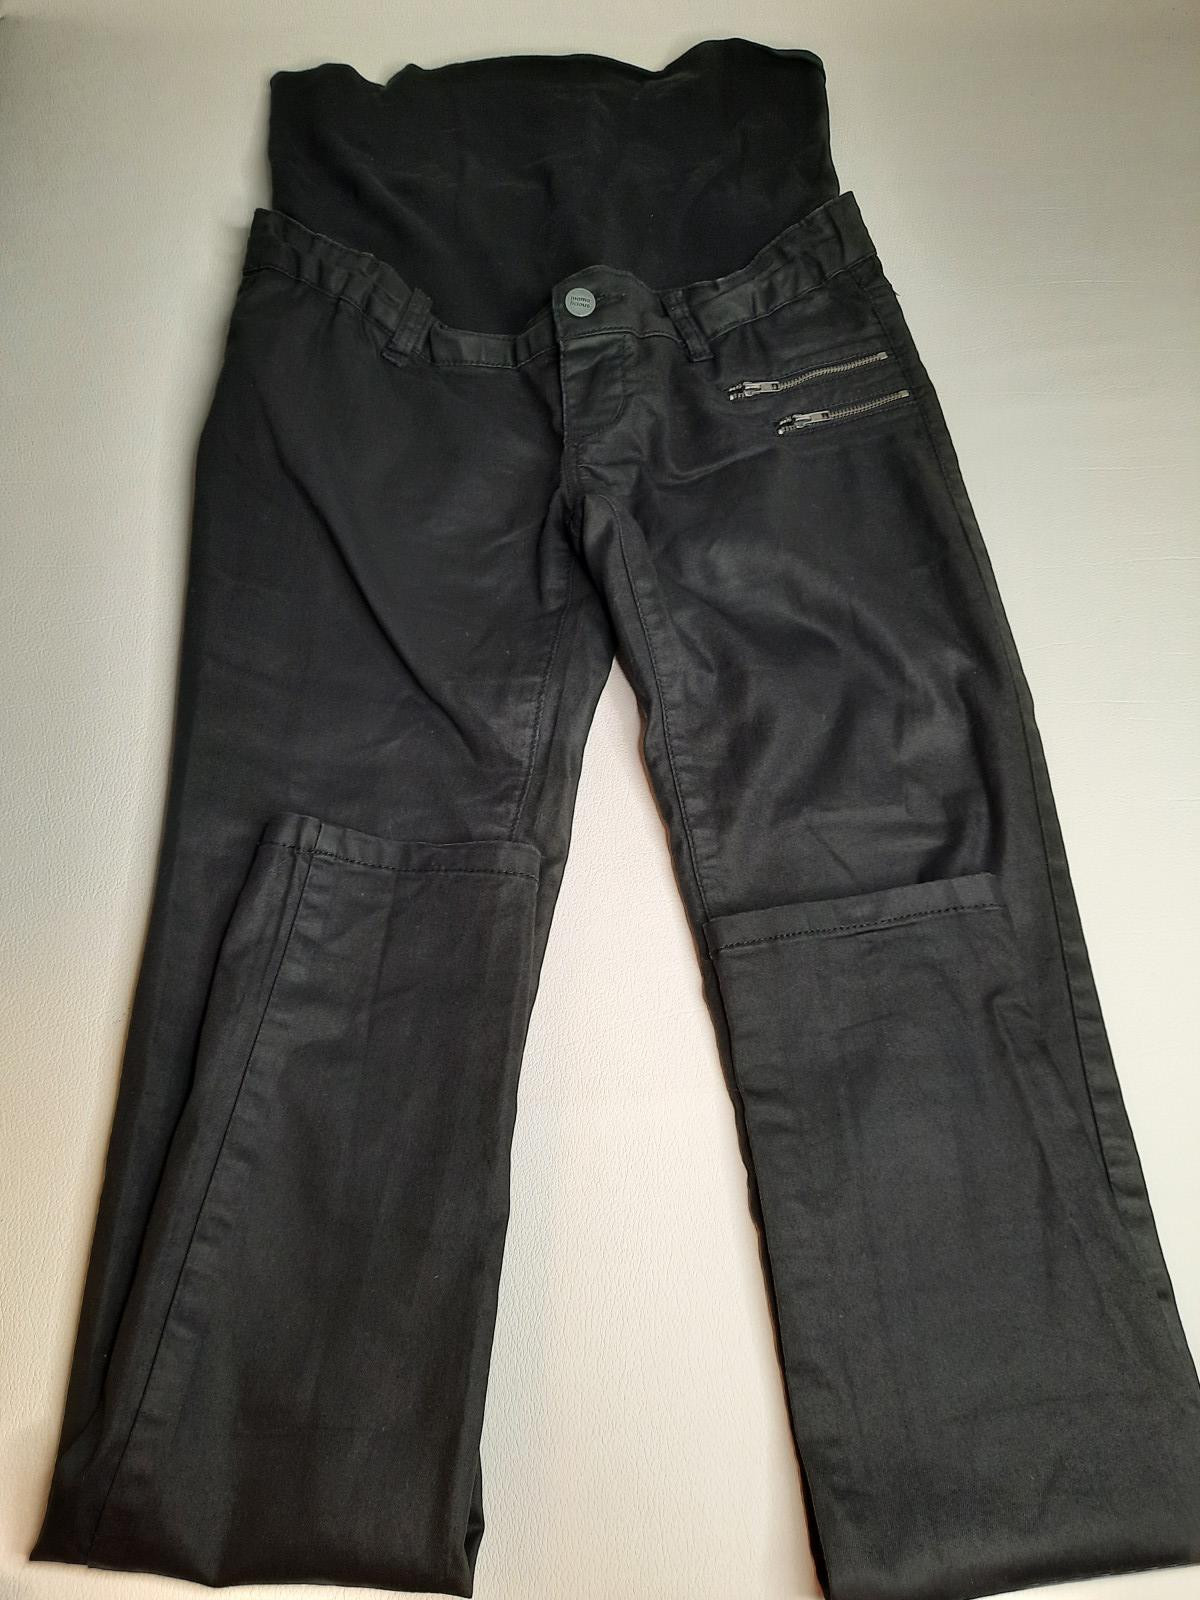 Pantalon noir Taille 27/34 - Boutique Toup'tibou - photo 6